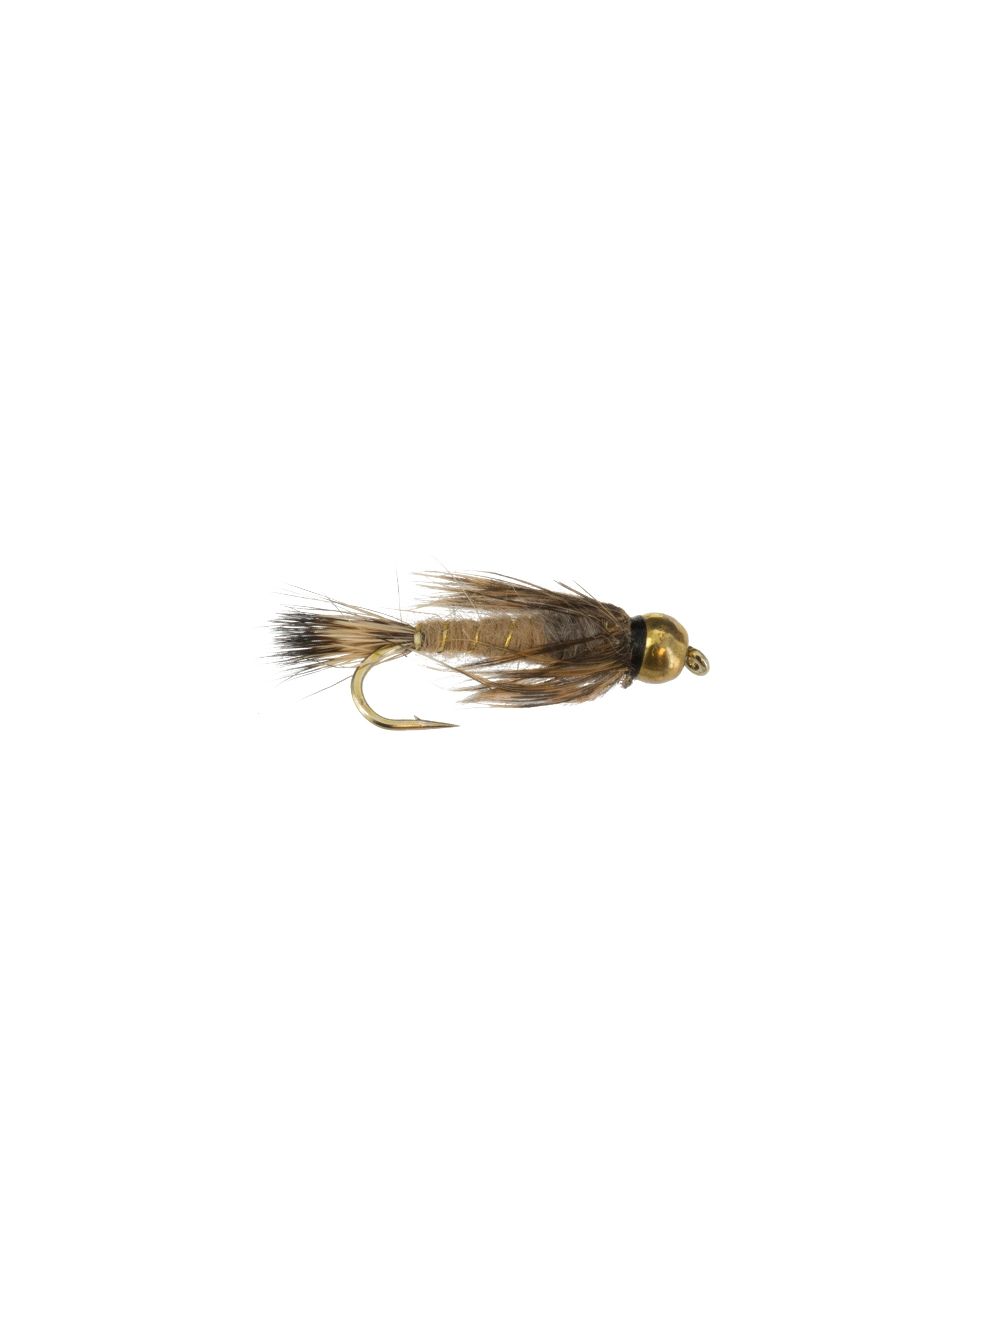 Beadhead Nymphs, Flies For Fly Fishing